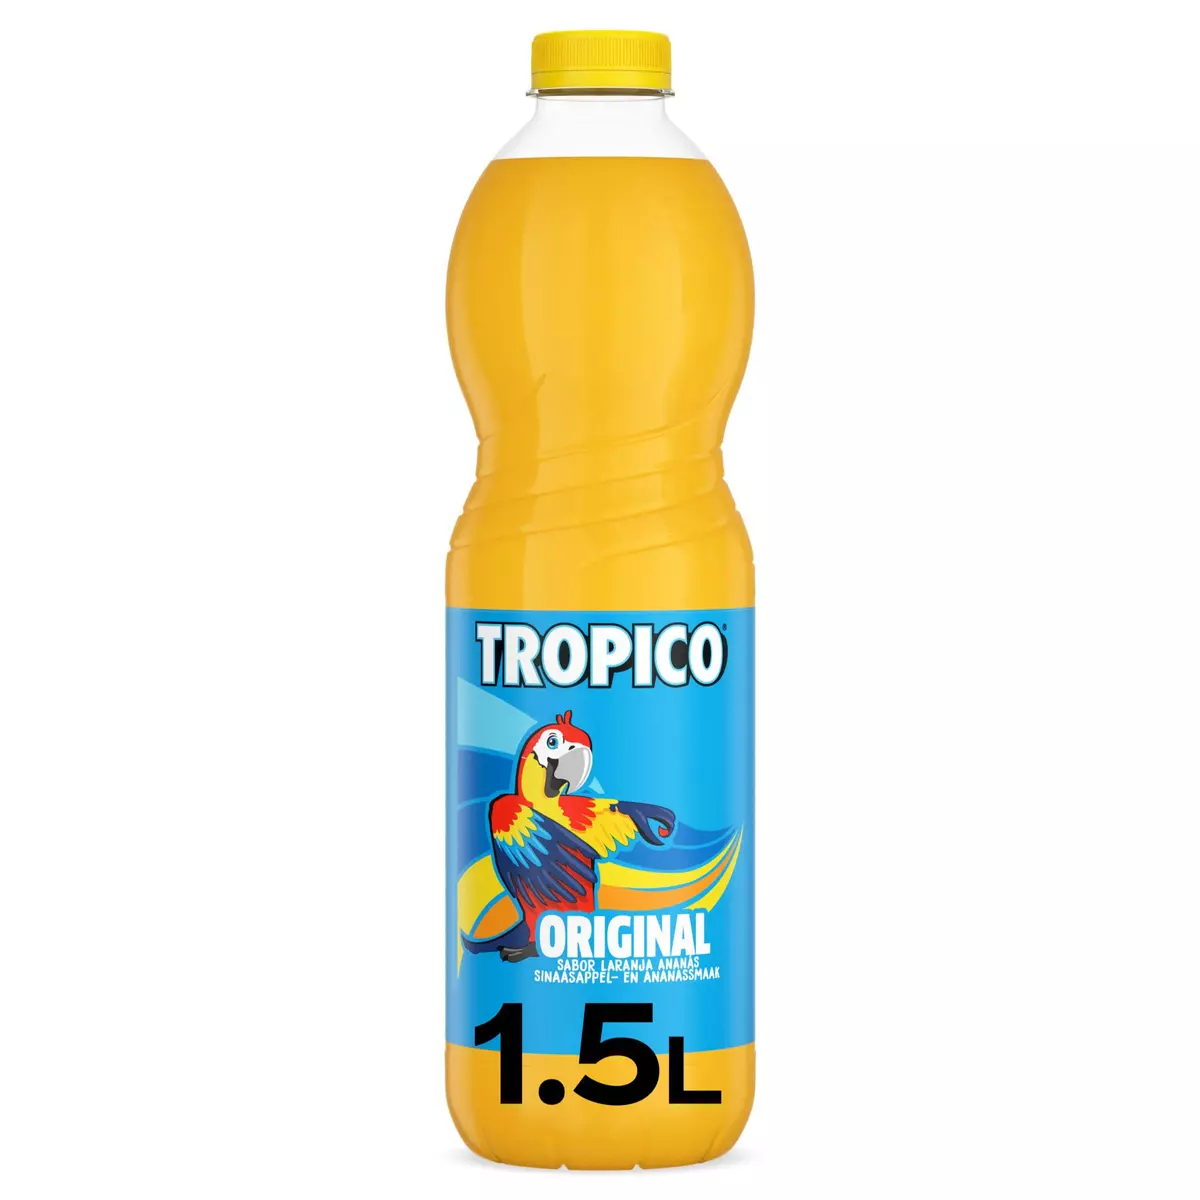 TROPICO Boisson aux fruits l'original orange ananas 1.5l